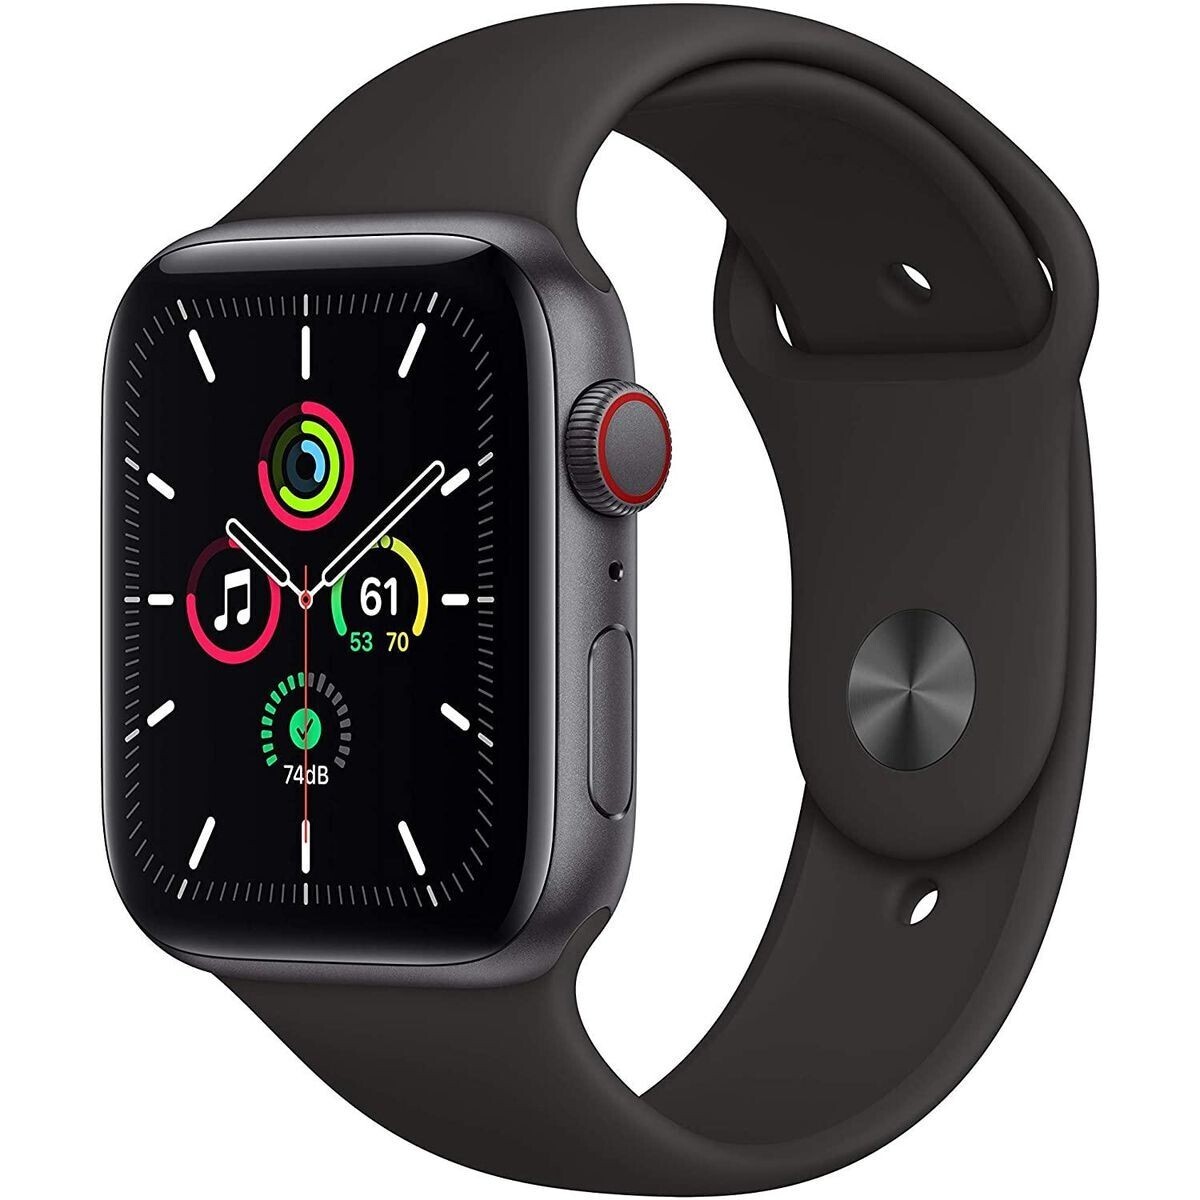 Смарт часы apple отзывы. Apple watch se 44mm Space Gray. Apple watch Series 3 38mm. Эпл вотч se 40 мм. Apple watch se 40mm.